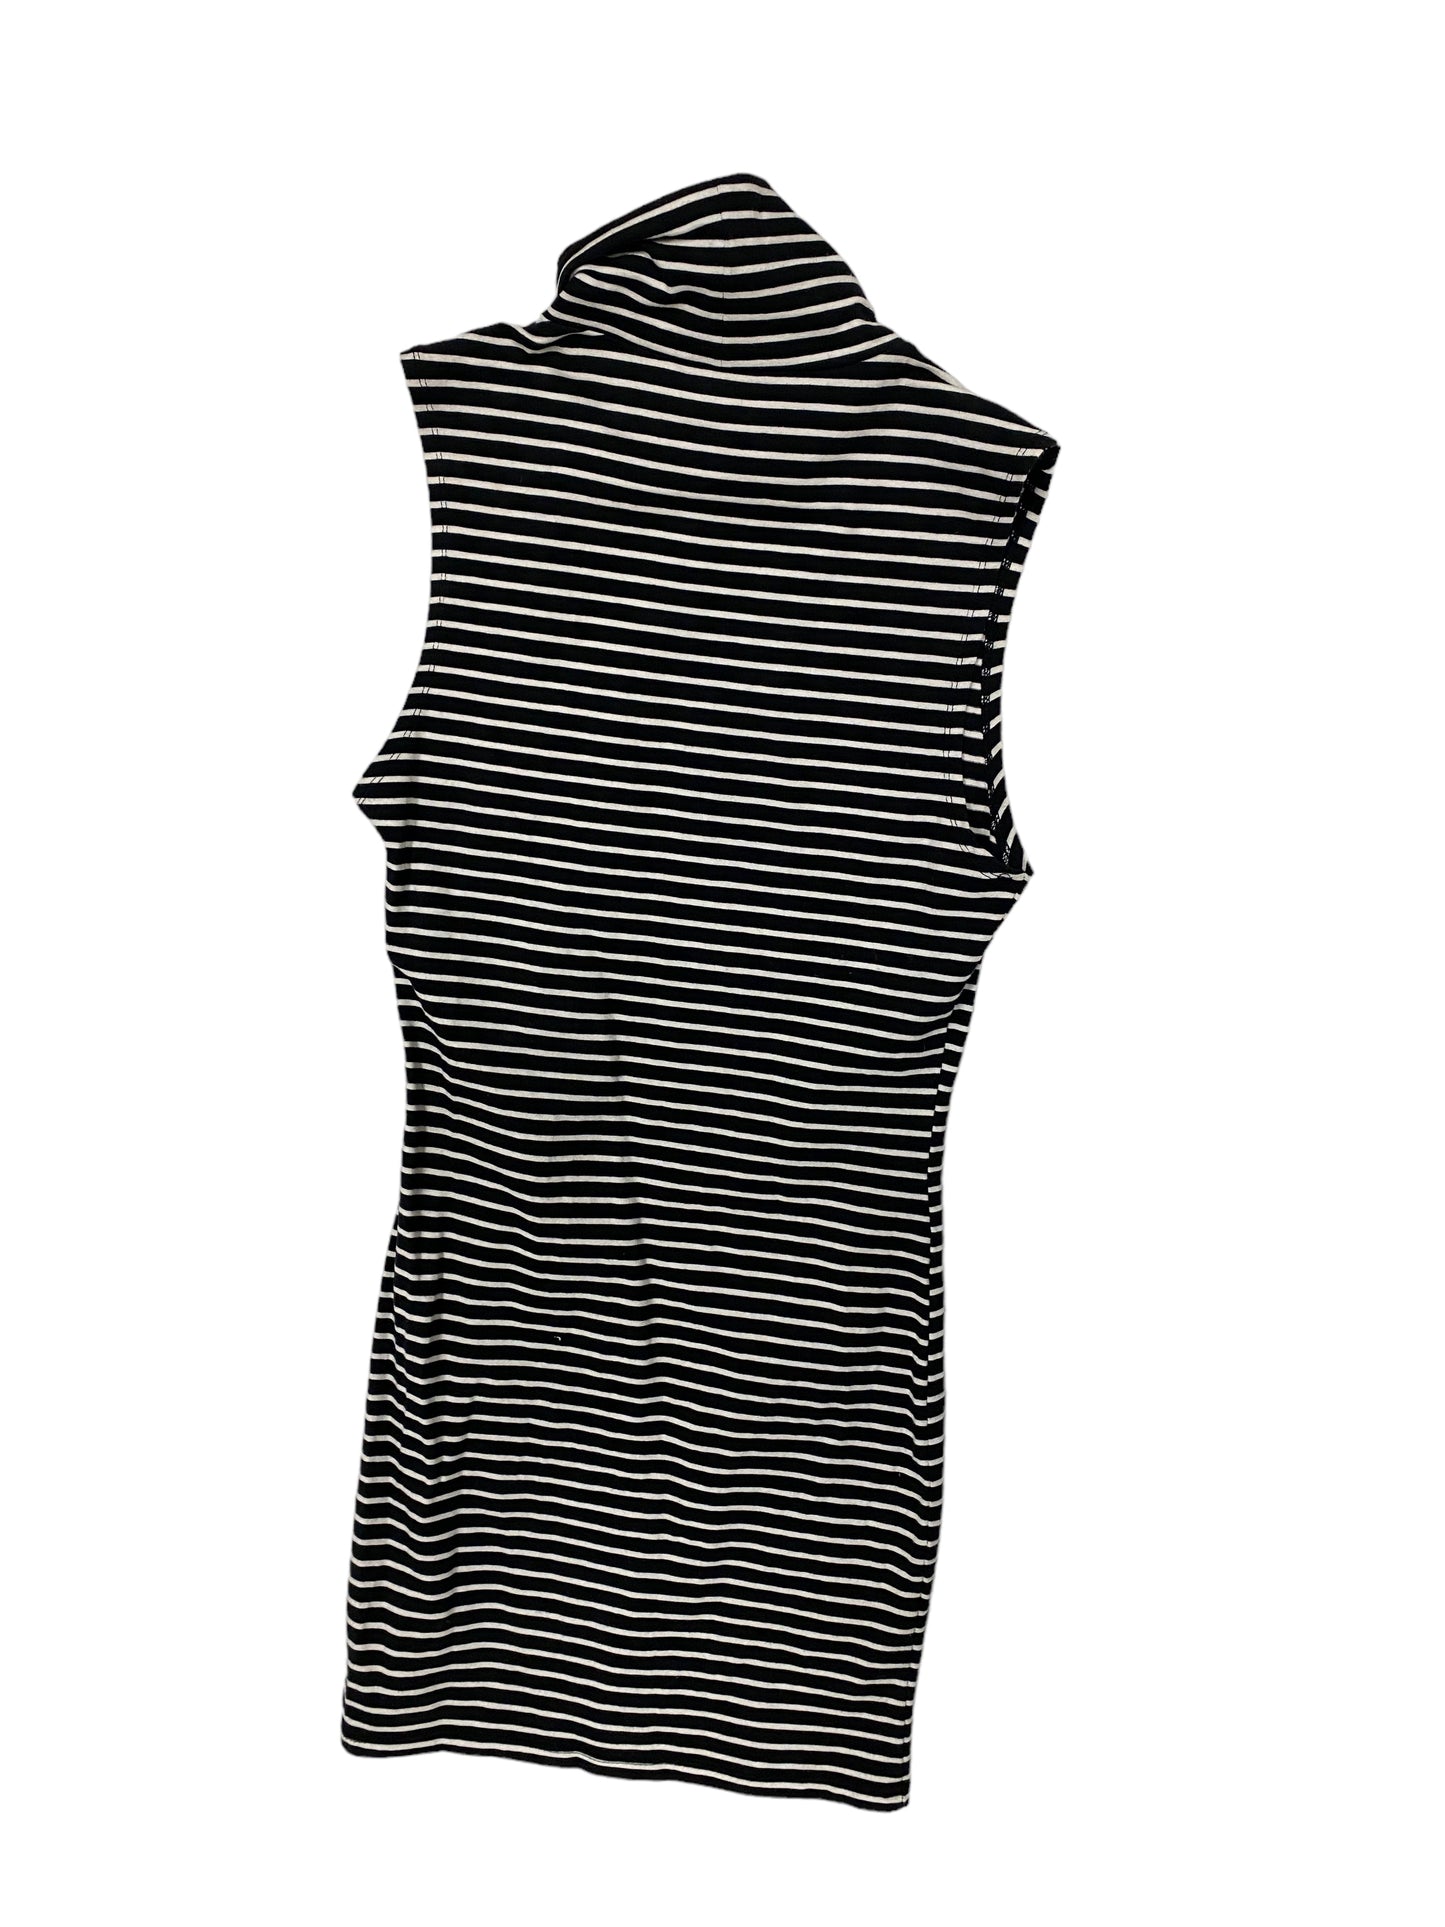 Striped Pattern Dress Casual Short Cmc, Size S